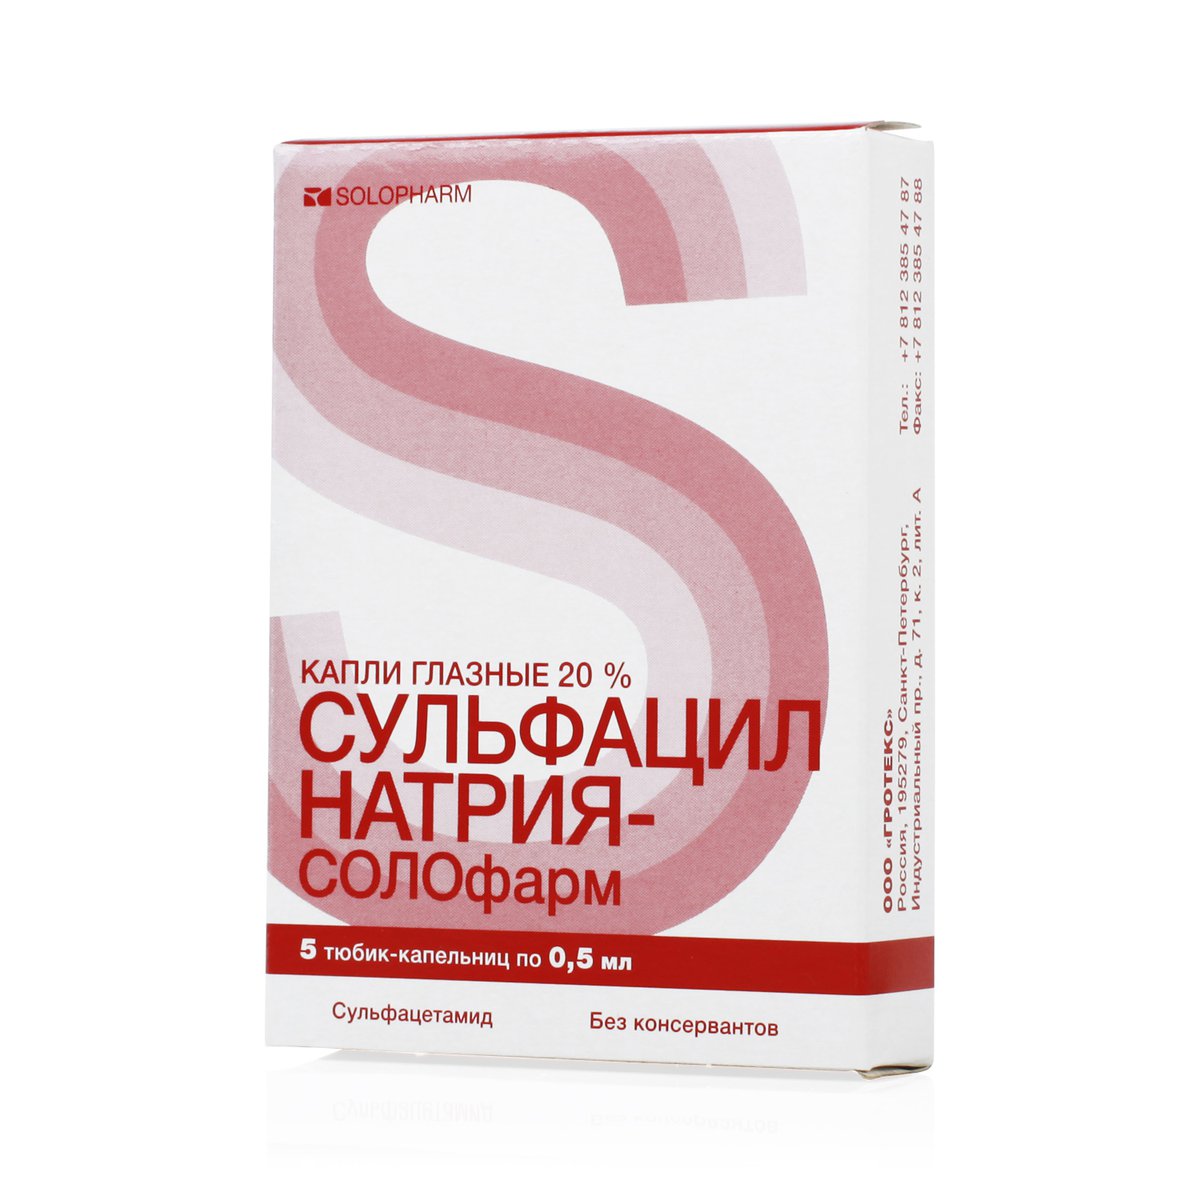 Сульфацил натрия-СОЛОфарм (капли, 5 шт, 0,5 мл, 20 %, глазные) - цена .